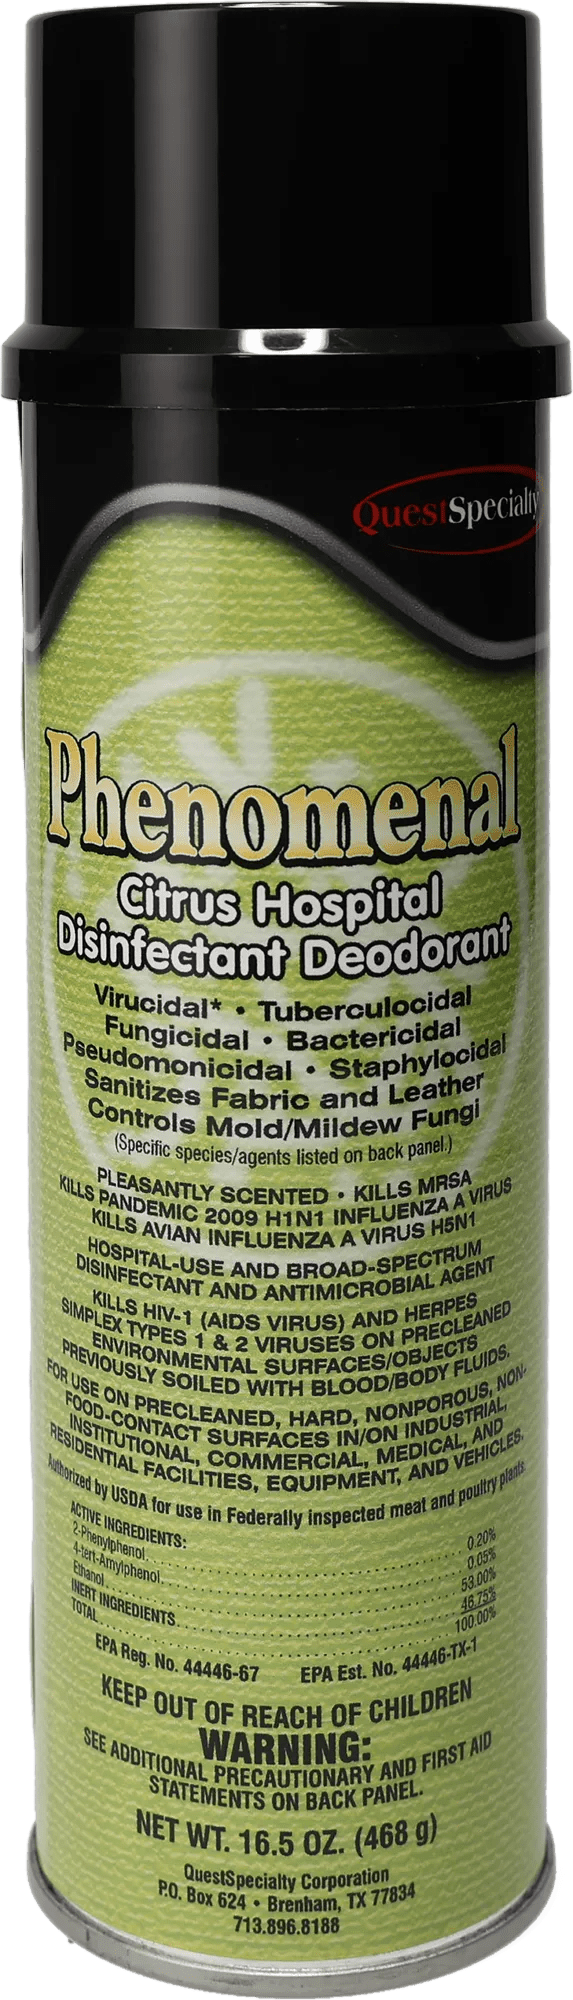 Phenomenal Disinfectant and Deodorant